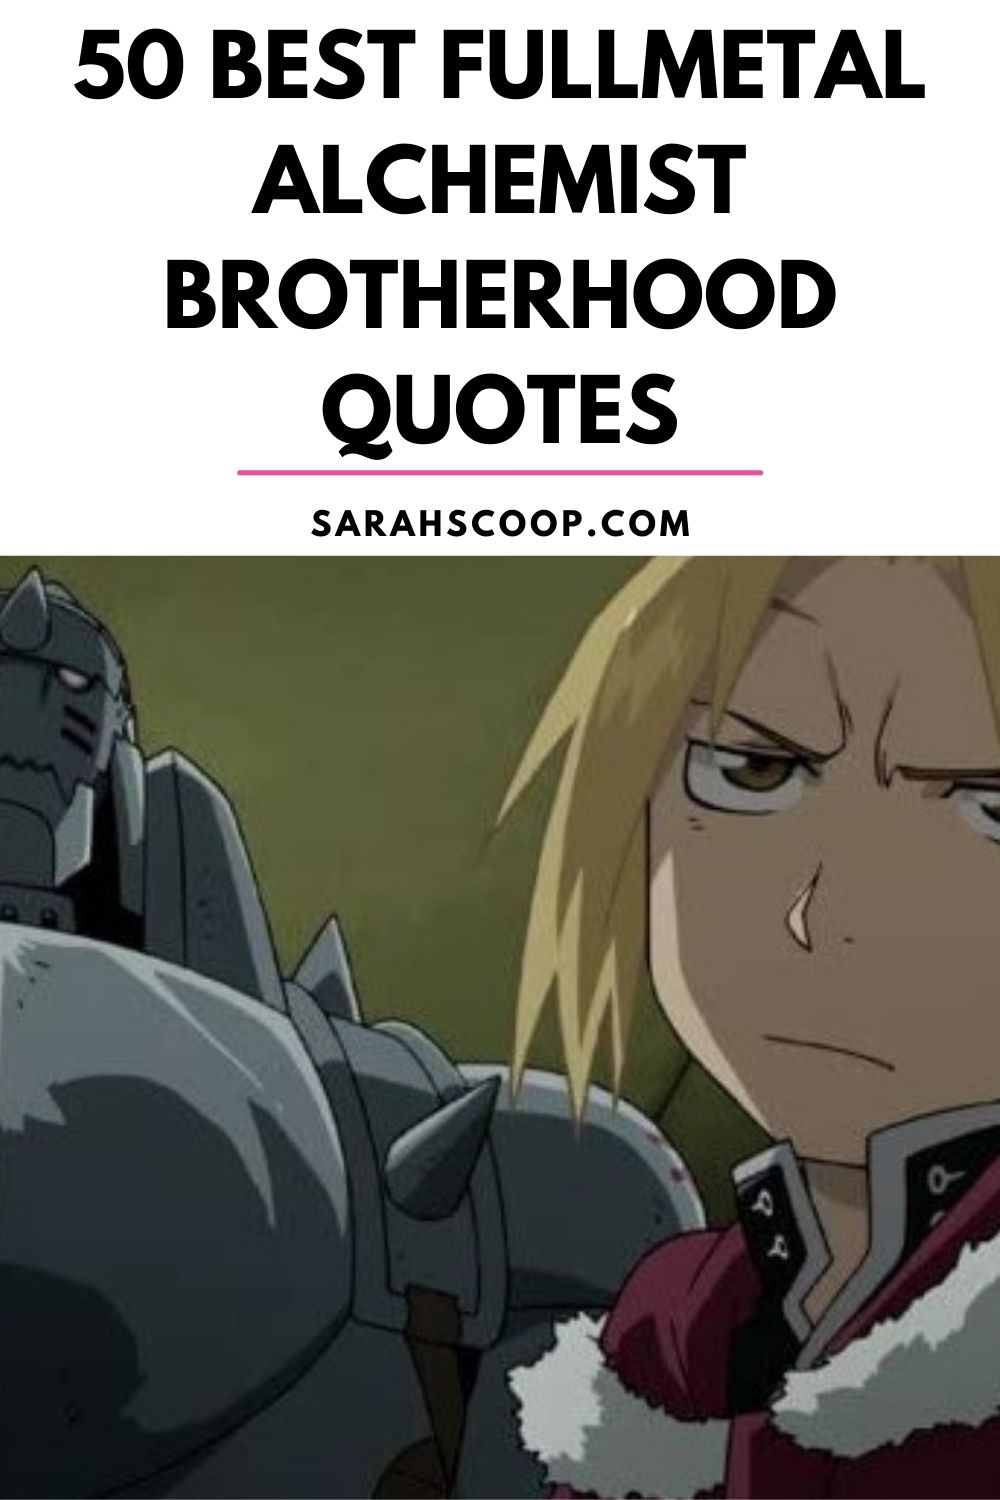 50 Best Fullmetal Alchemist Brotherhood Quotes - Sarah Scoop